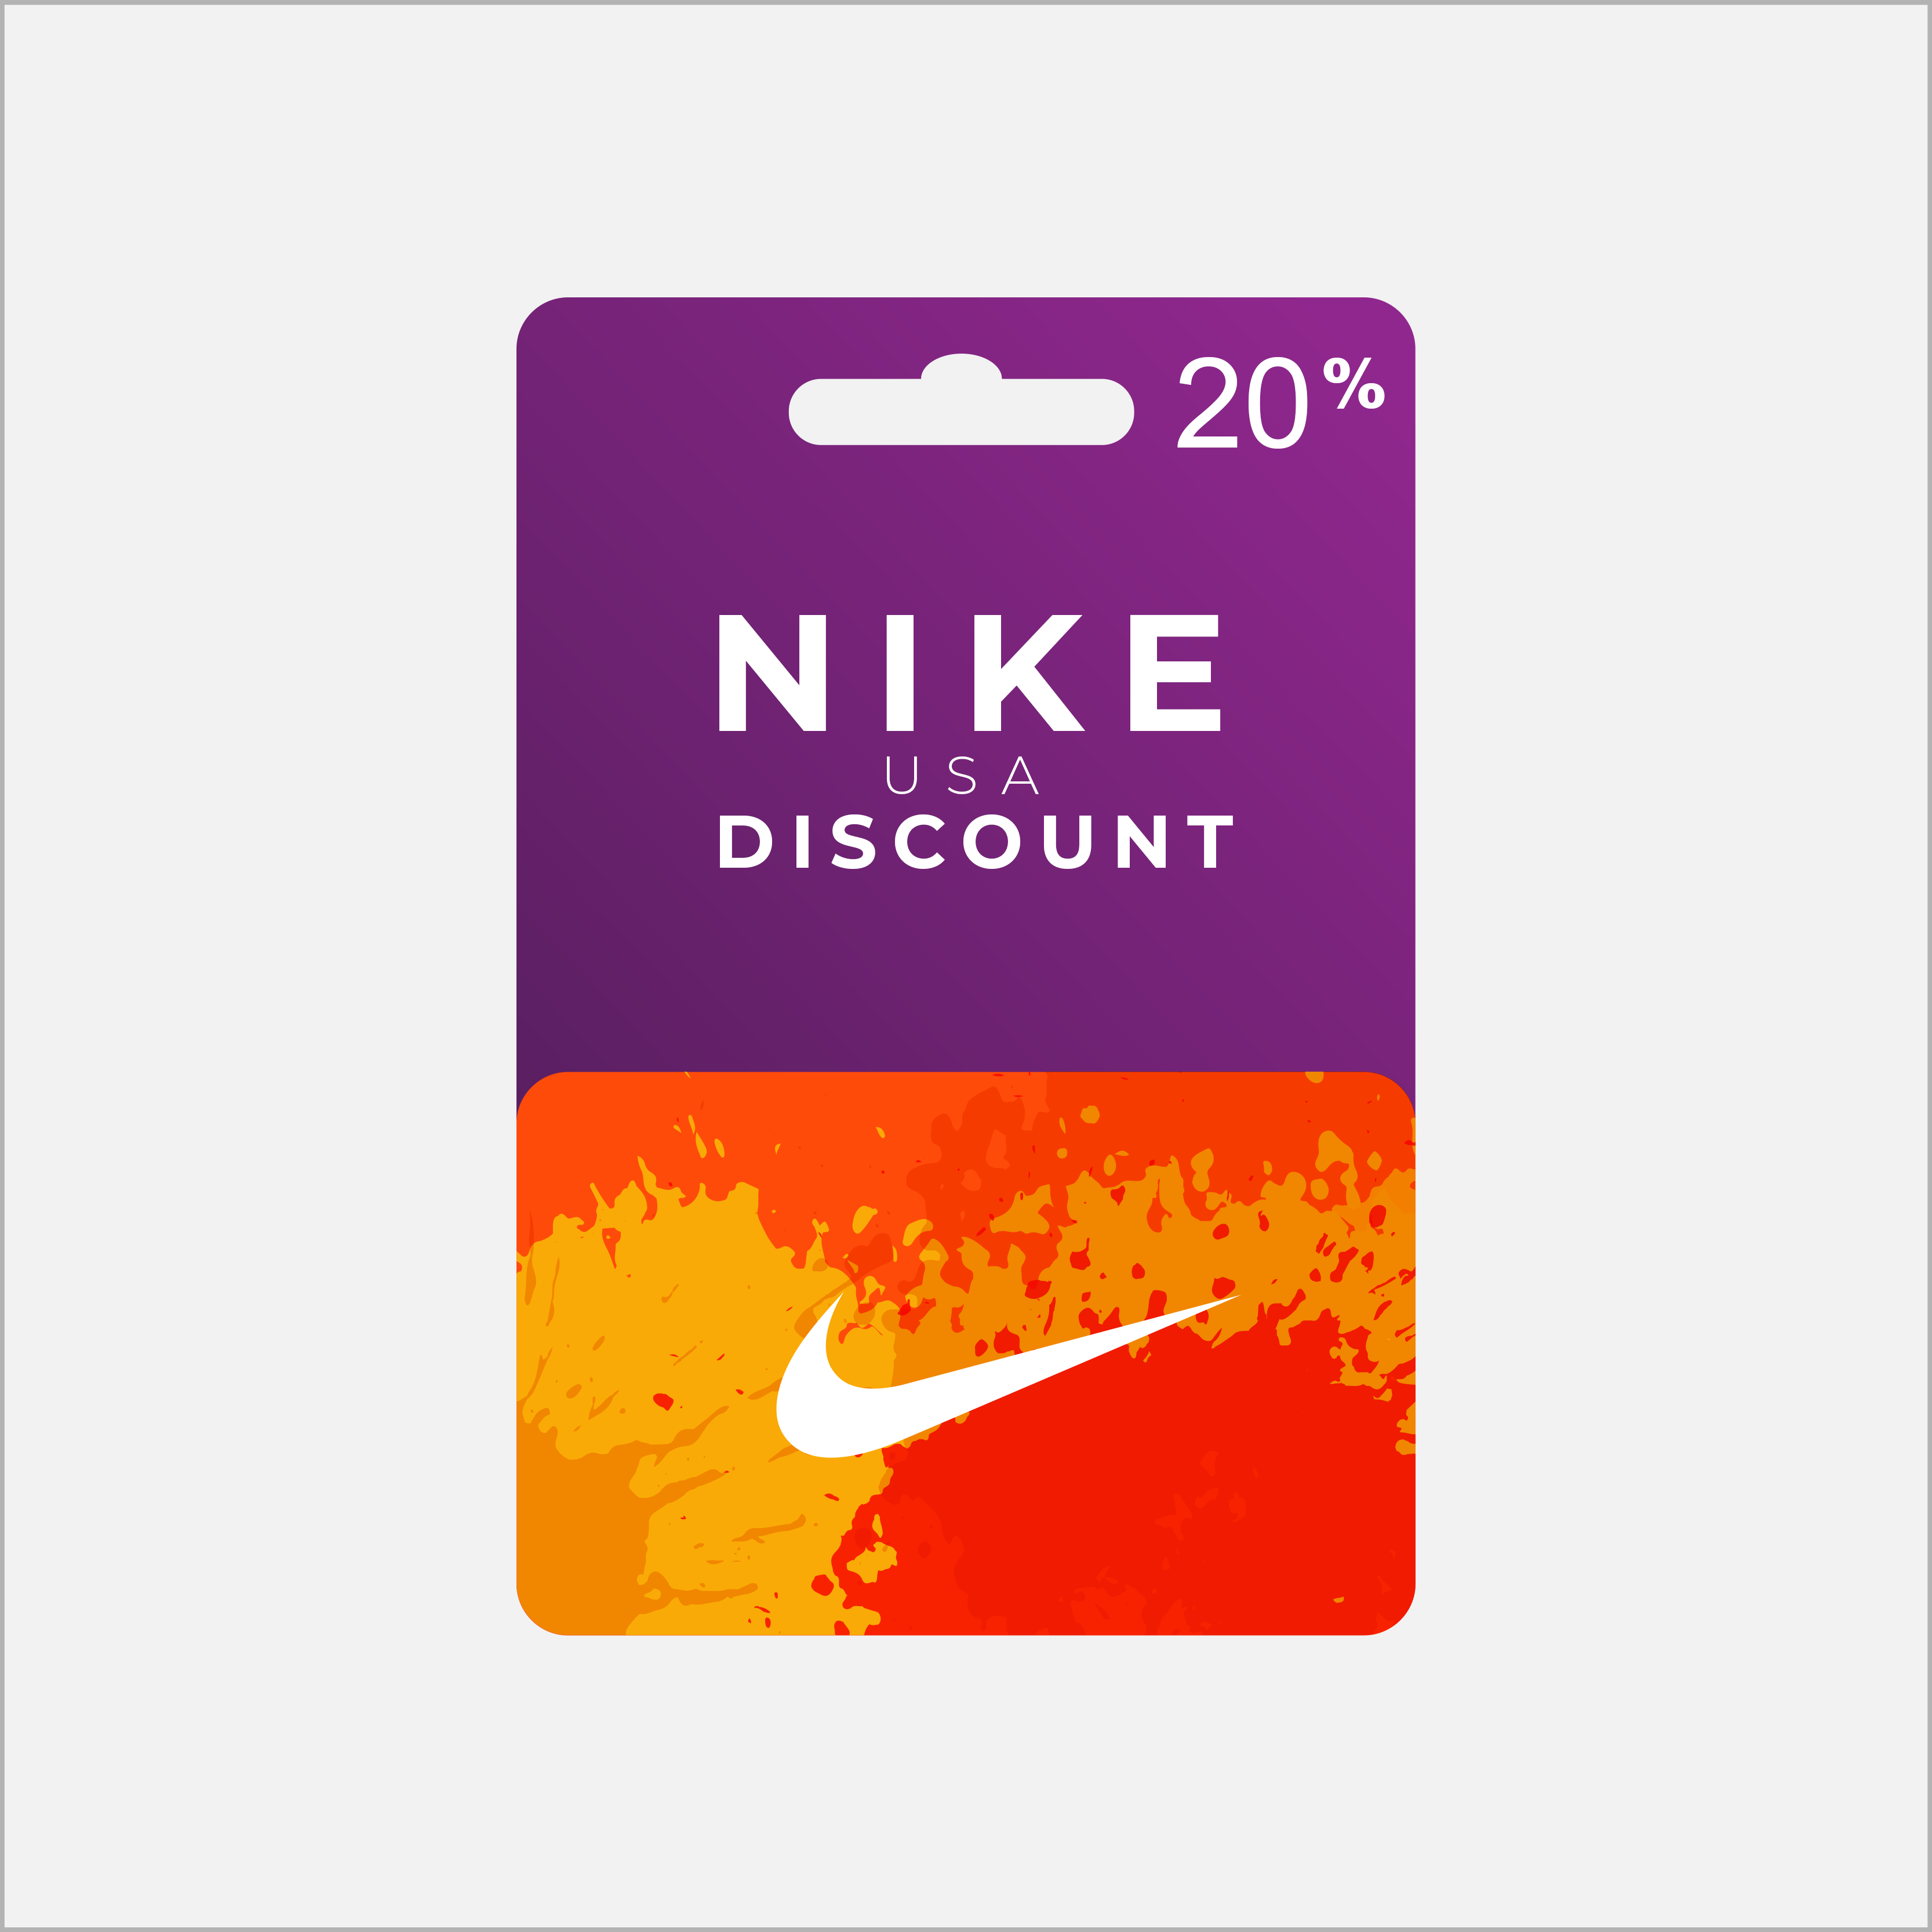 Nike Discount Code 20% (USA)